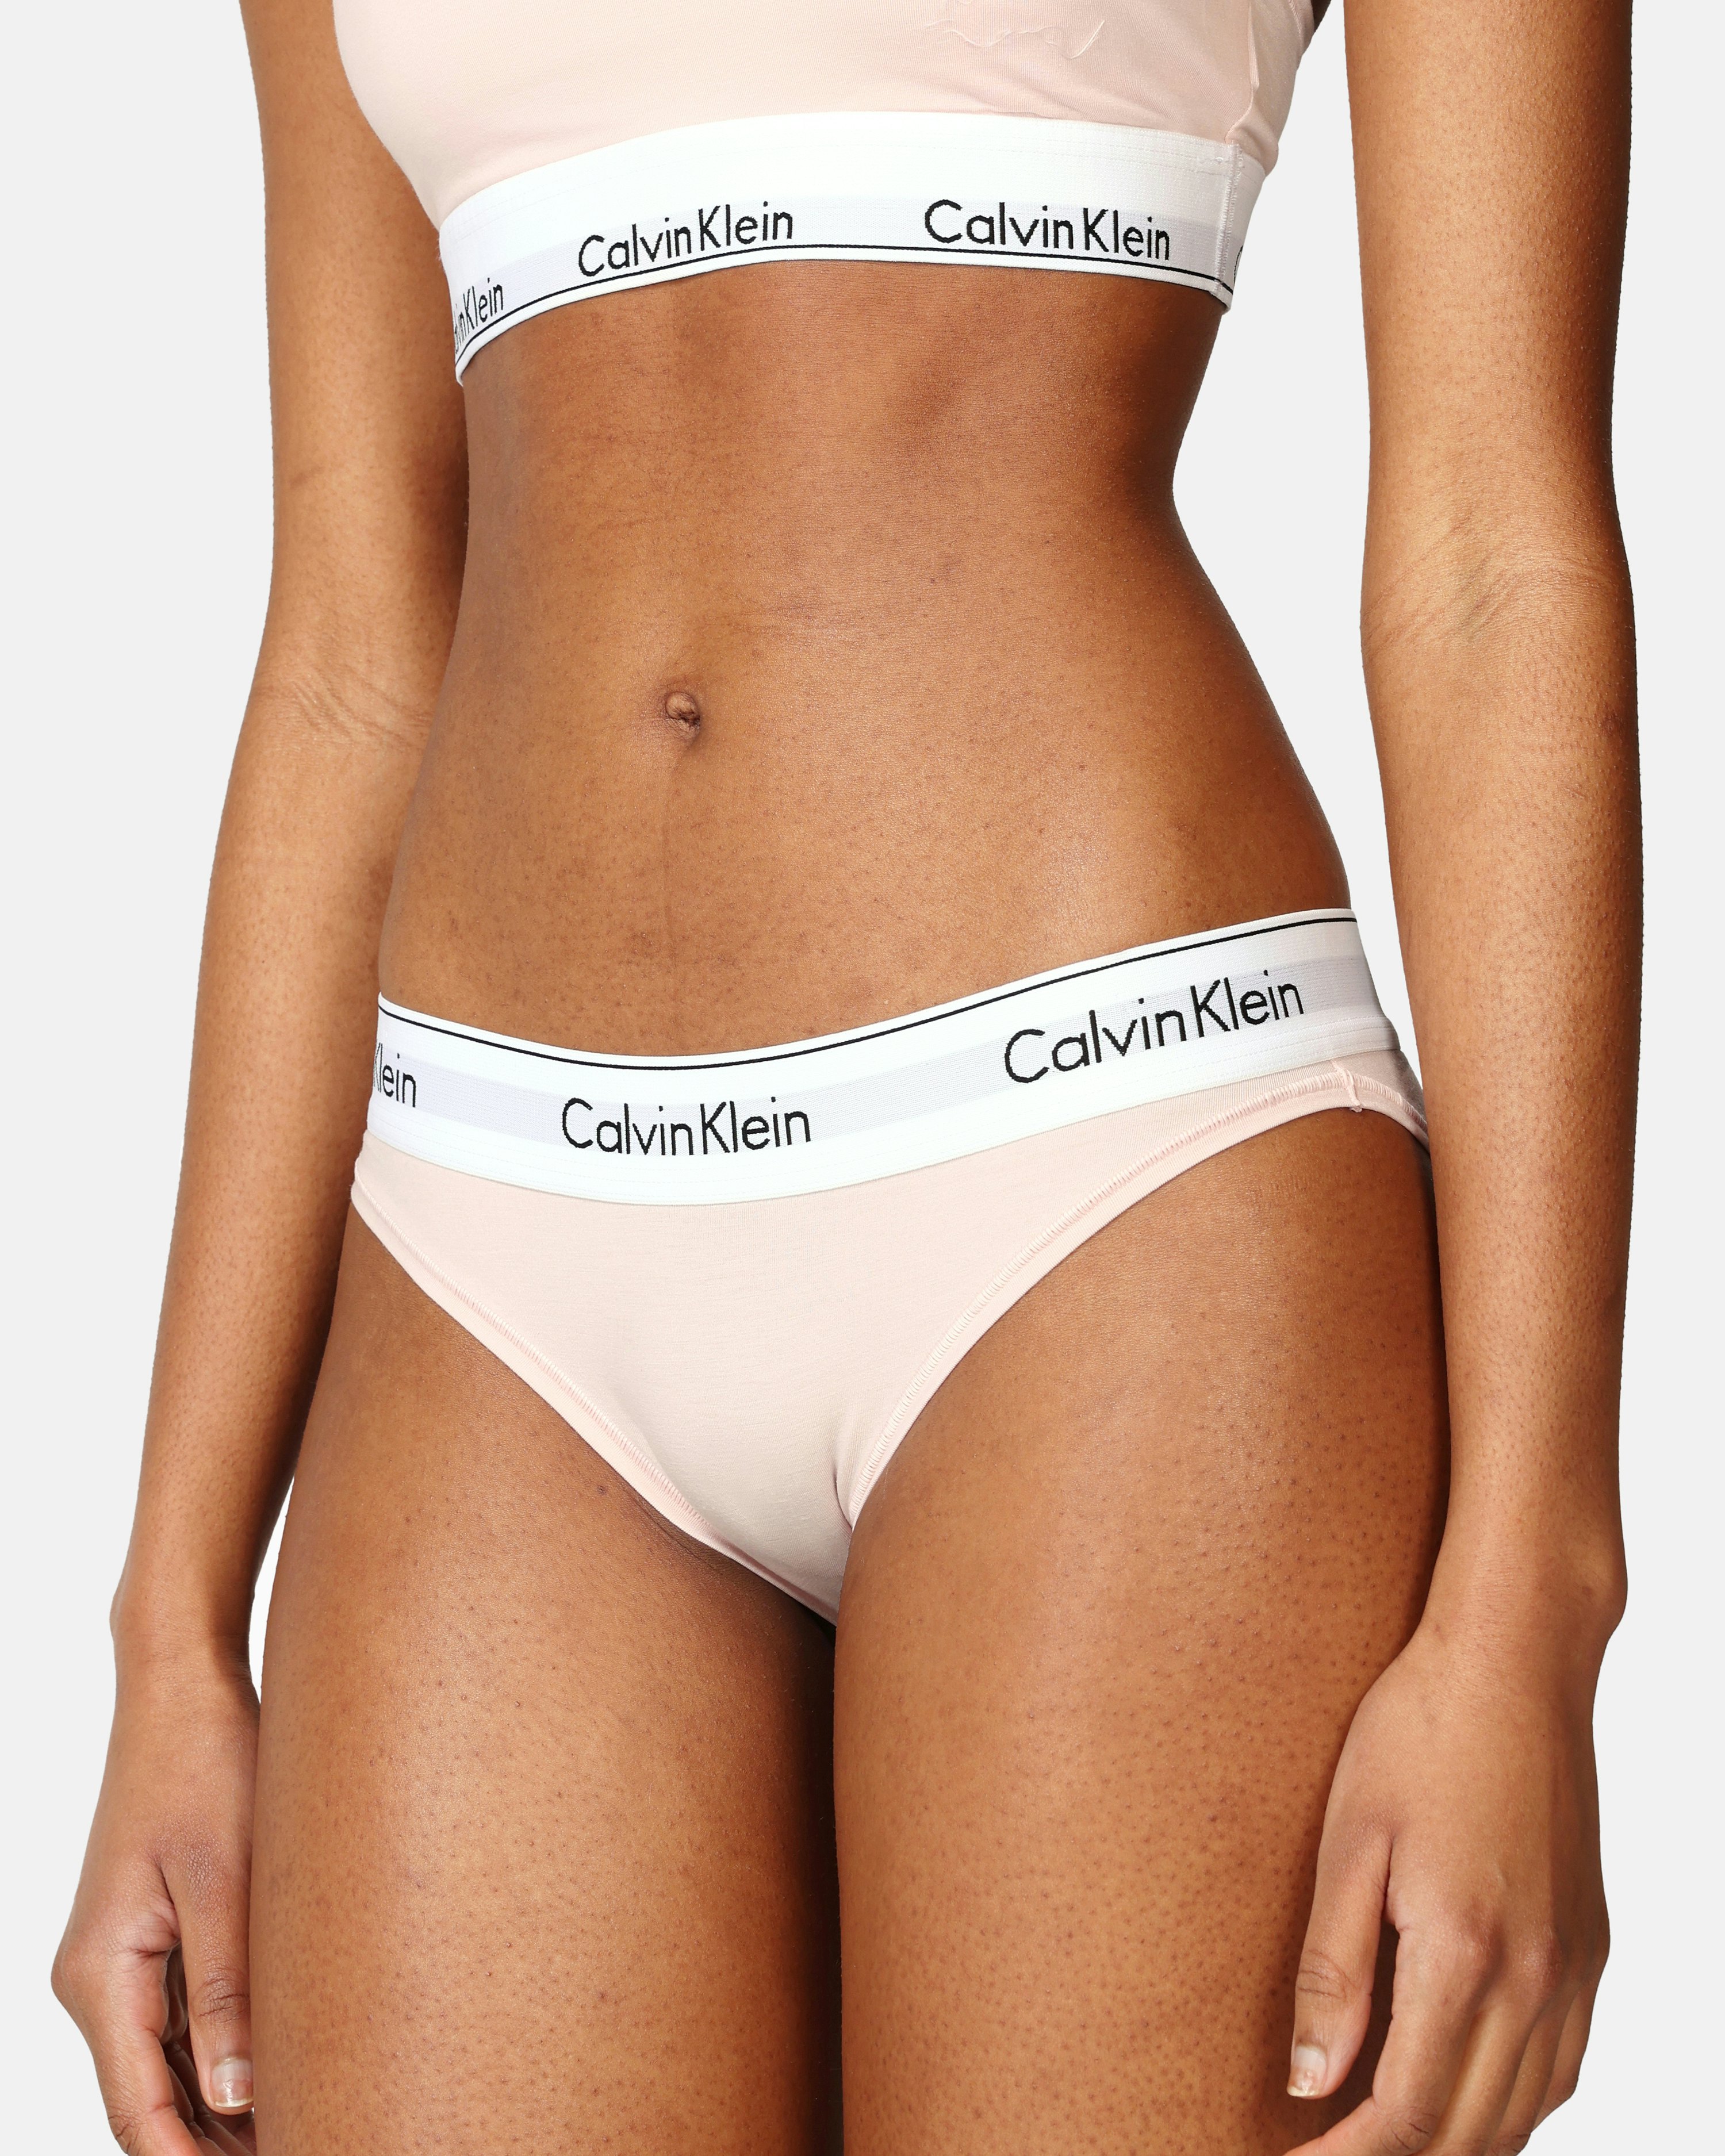 Calvin Klein Bikini Underwear, Women's Fashion, New Undergarments